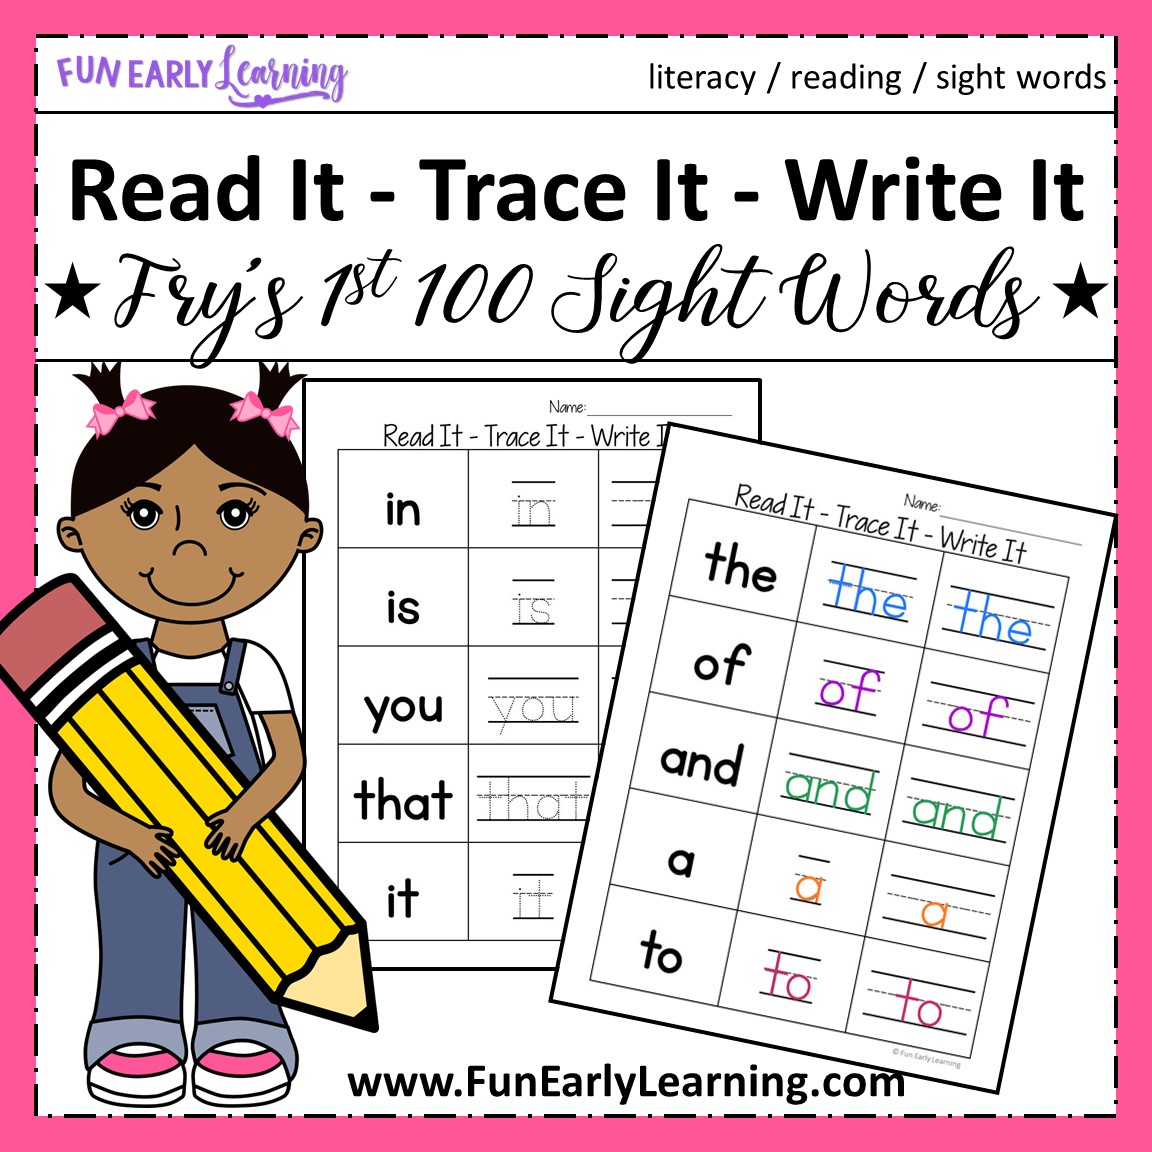 Preschool writing Worksheets, word lists and activities.